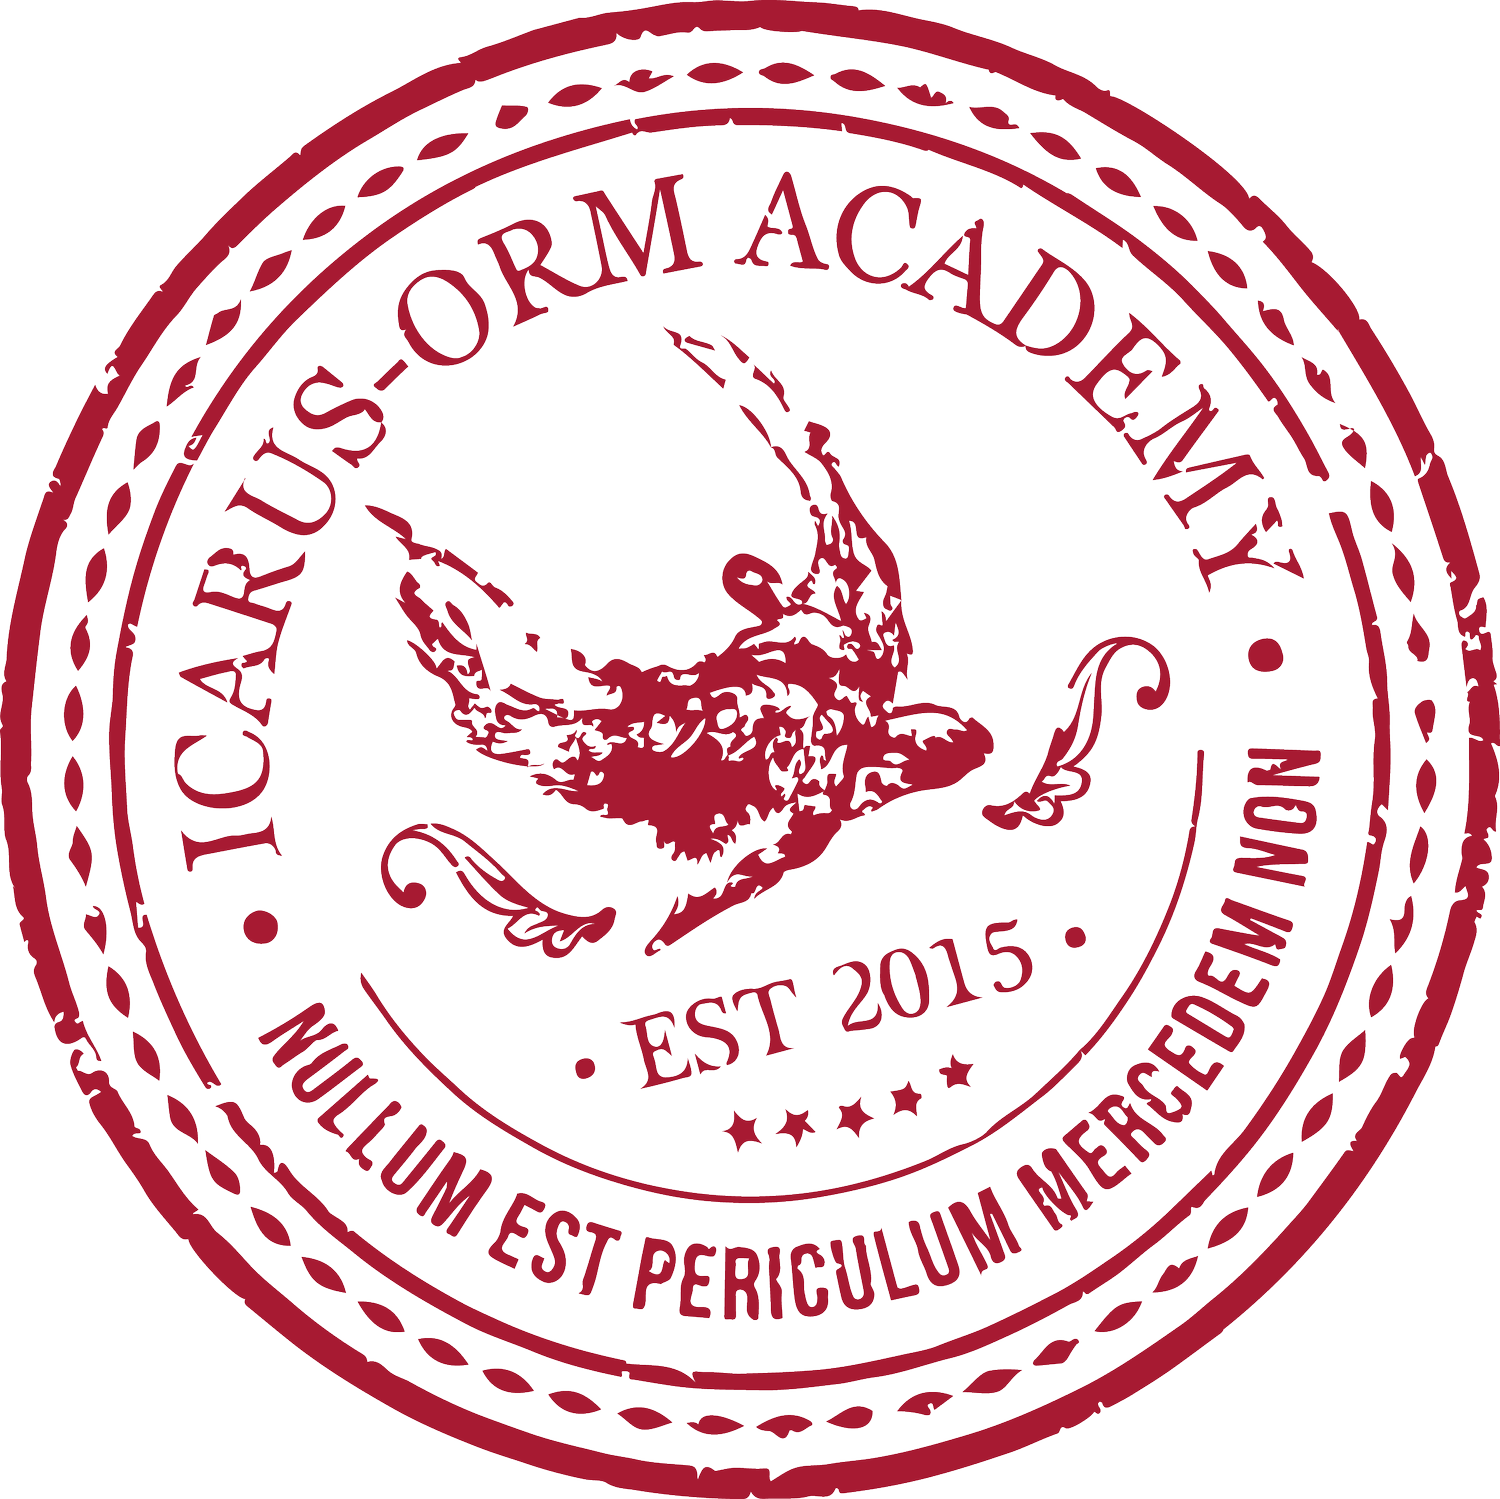 Icarus-ORM Academy